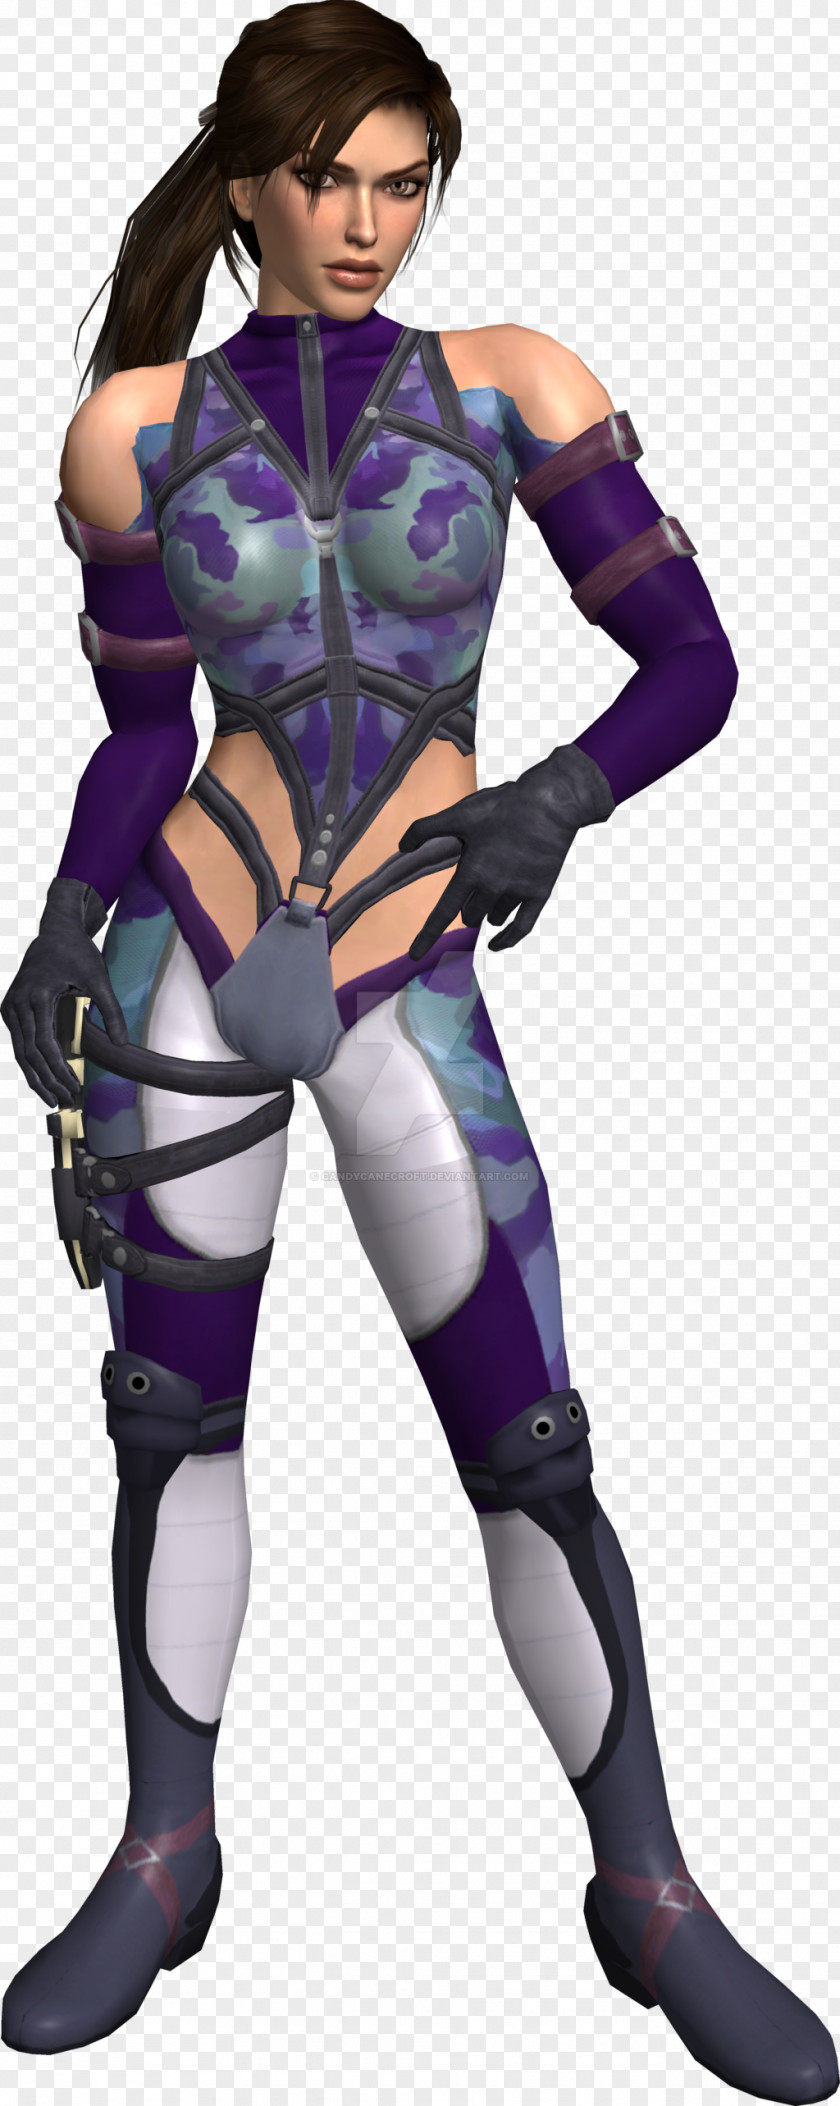 Lara Croft Tomb Raider DeviantArt Character PNG